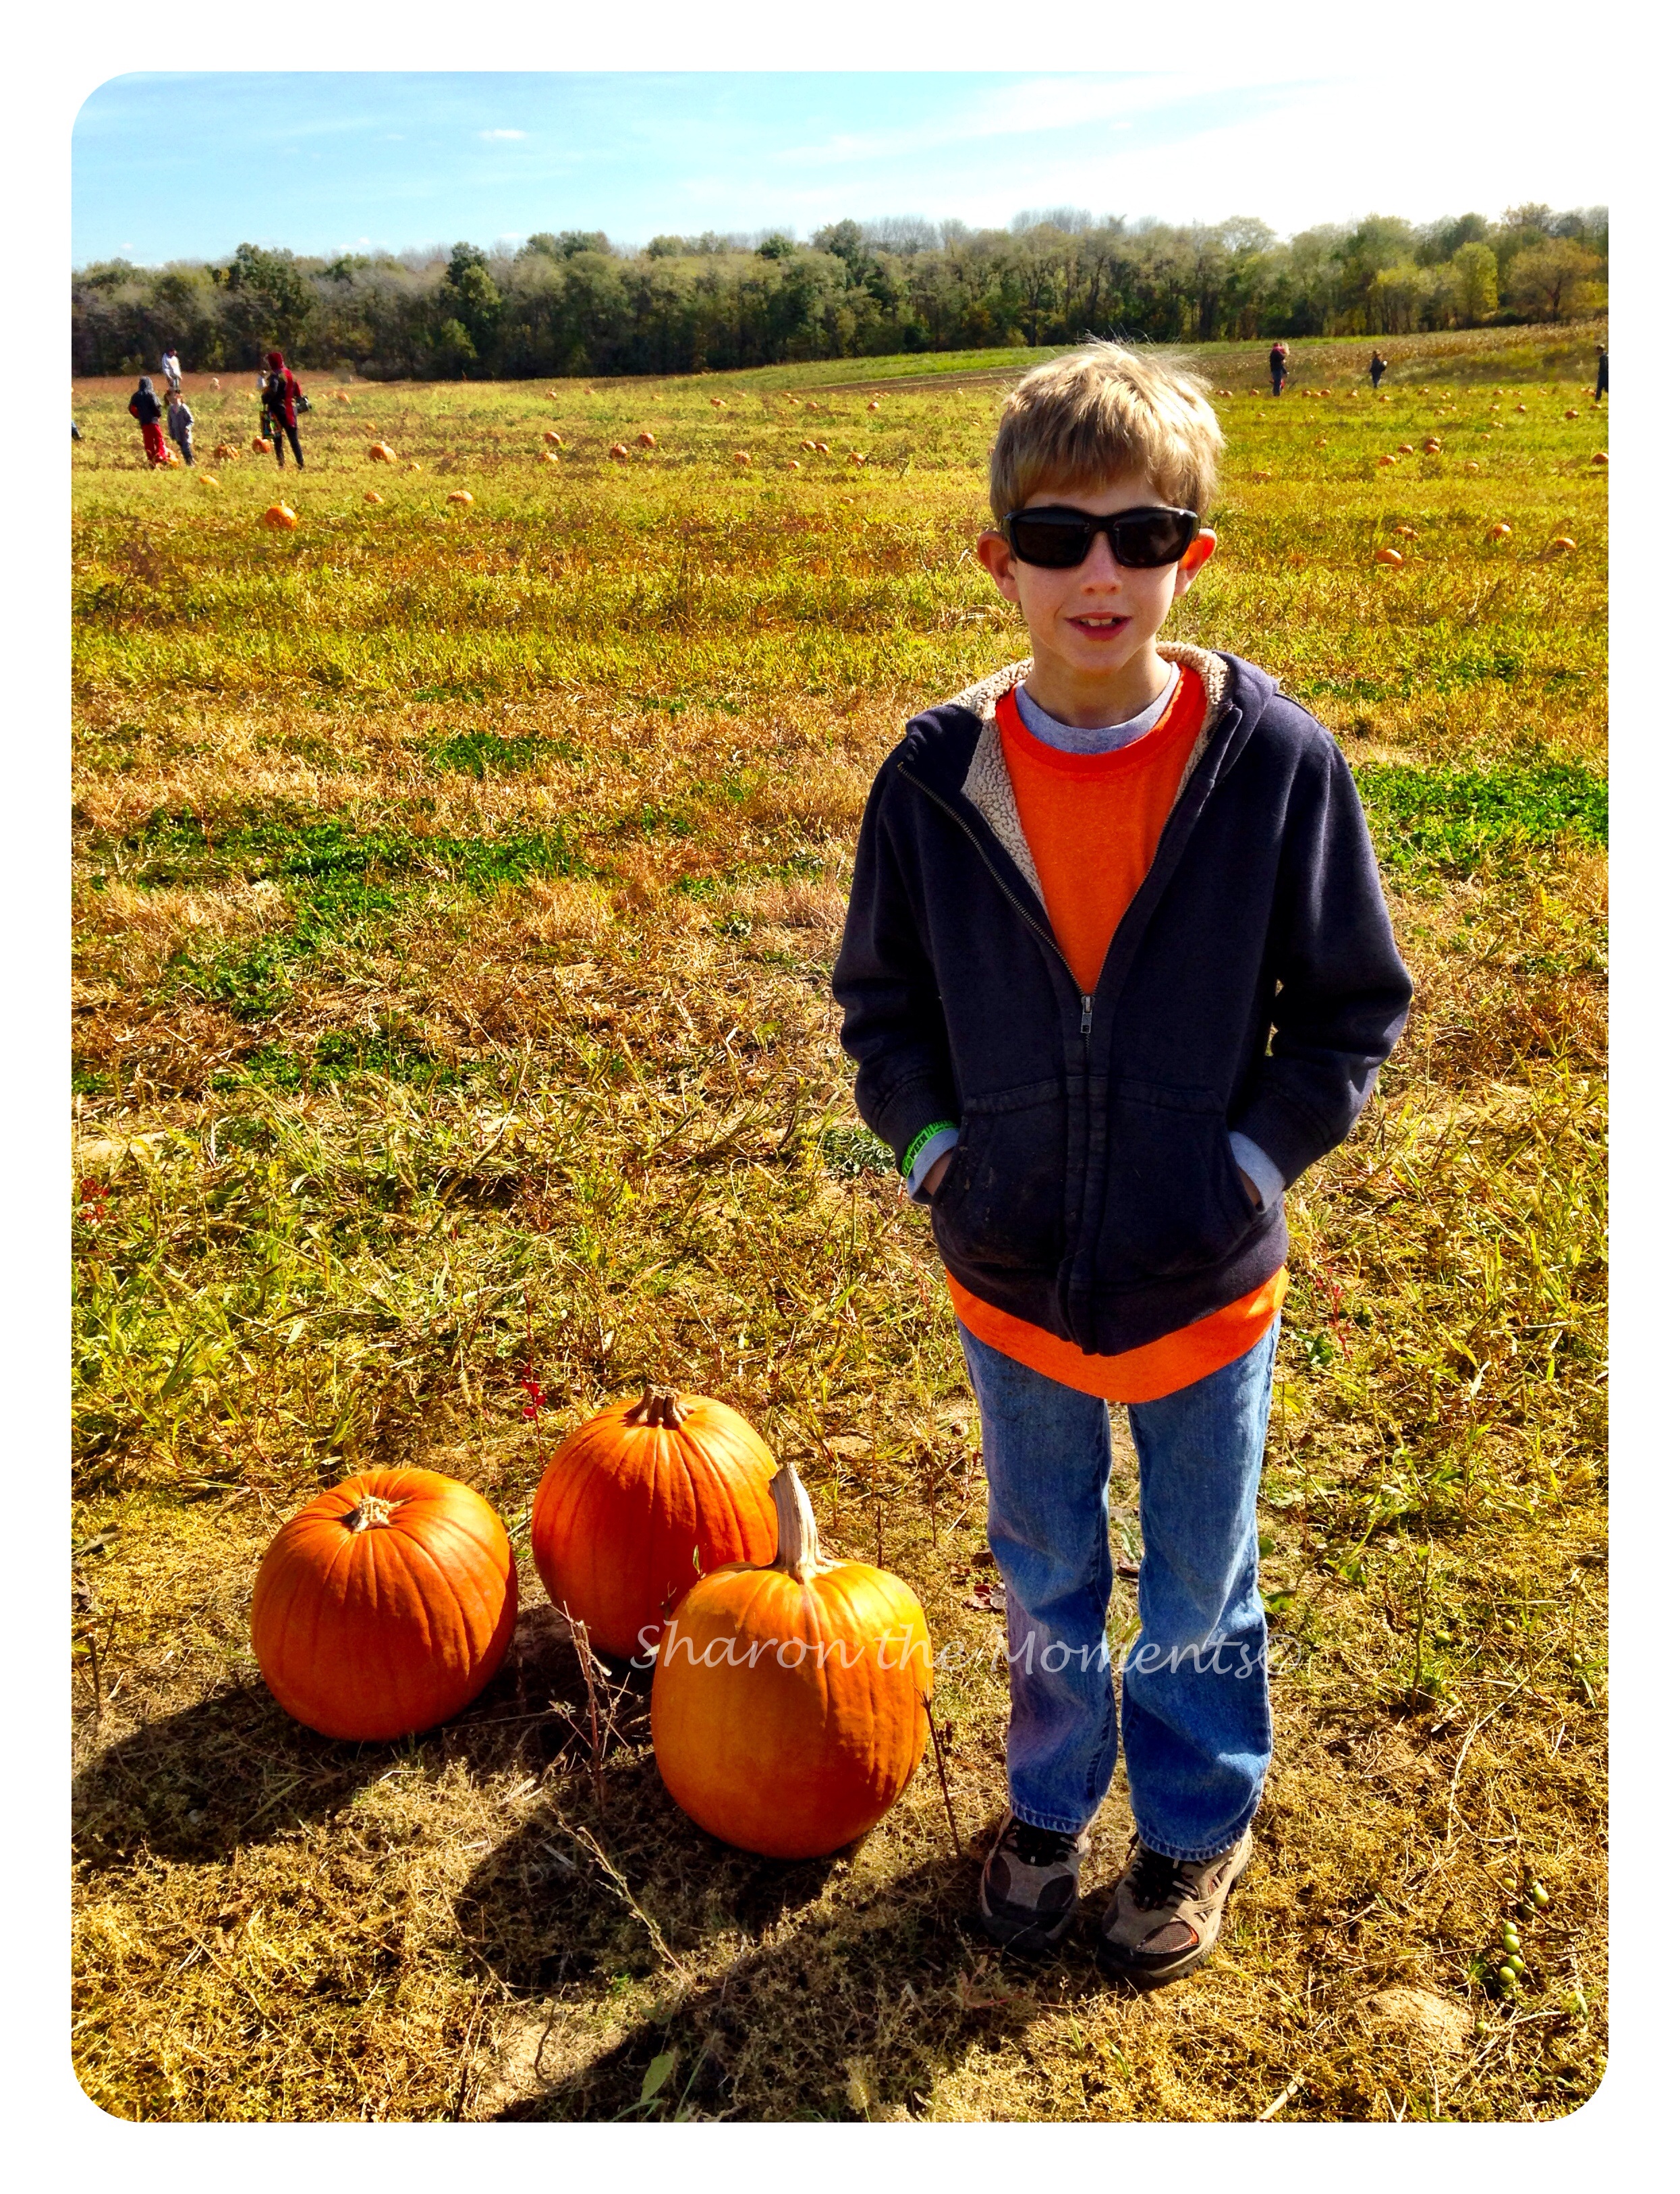 Pumpkin Patch Visit To Hidden Creek Farms|Sharon the Moments Blog